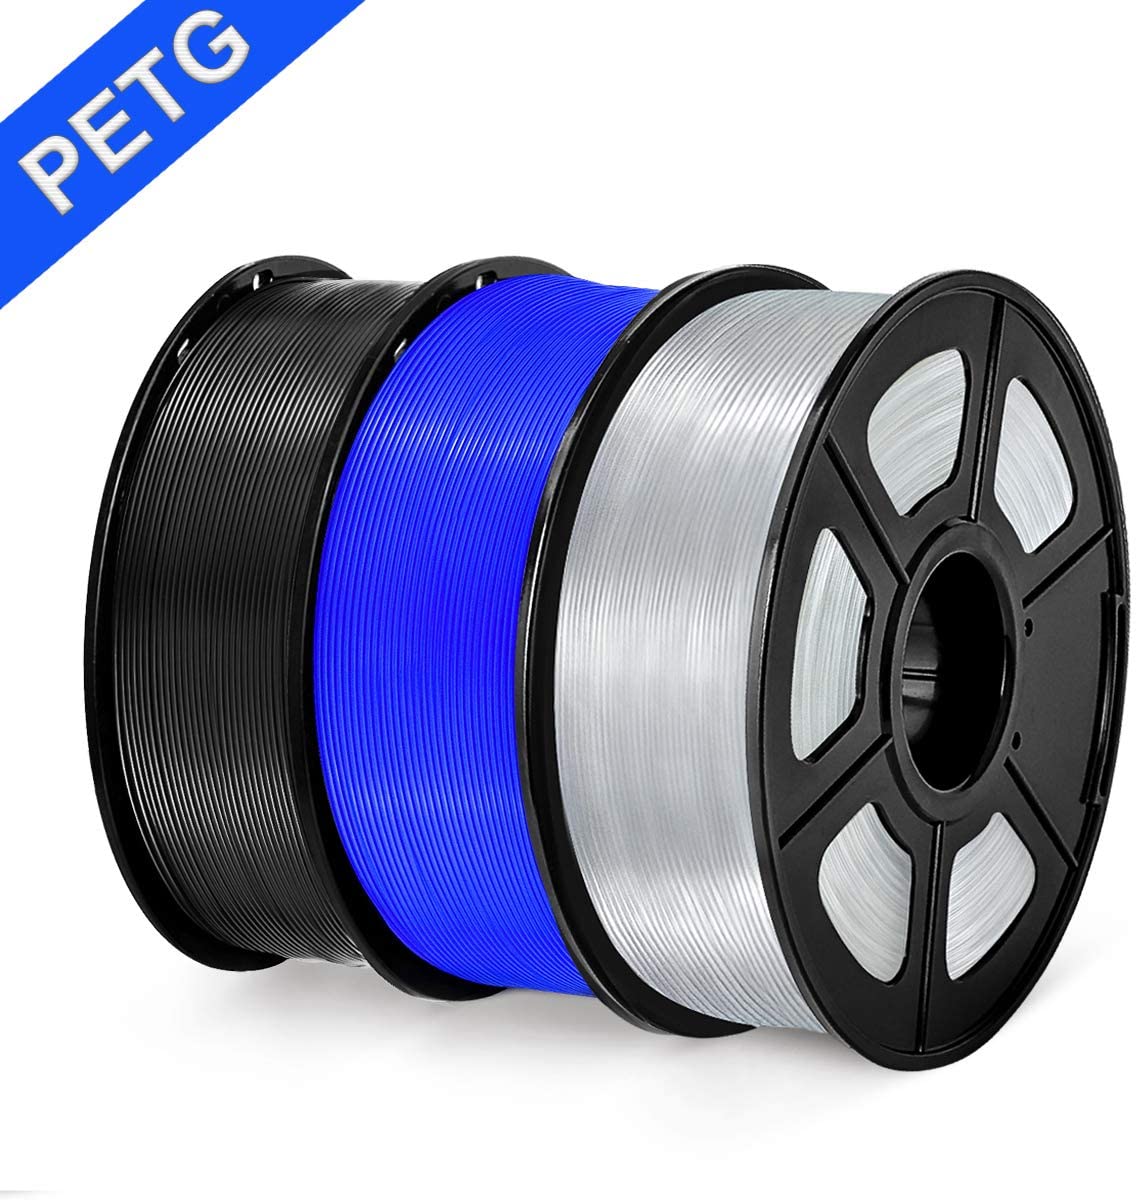 PETG 3D Printer Filament, SUNLU PETG Filament 1.75mm Dimensional Accuracy +/- 0.02 mm, 1 kg Spool, PETG Black + Blue + Transparent